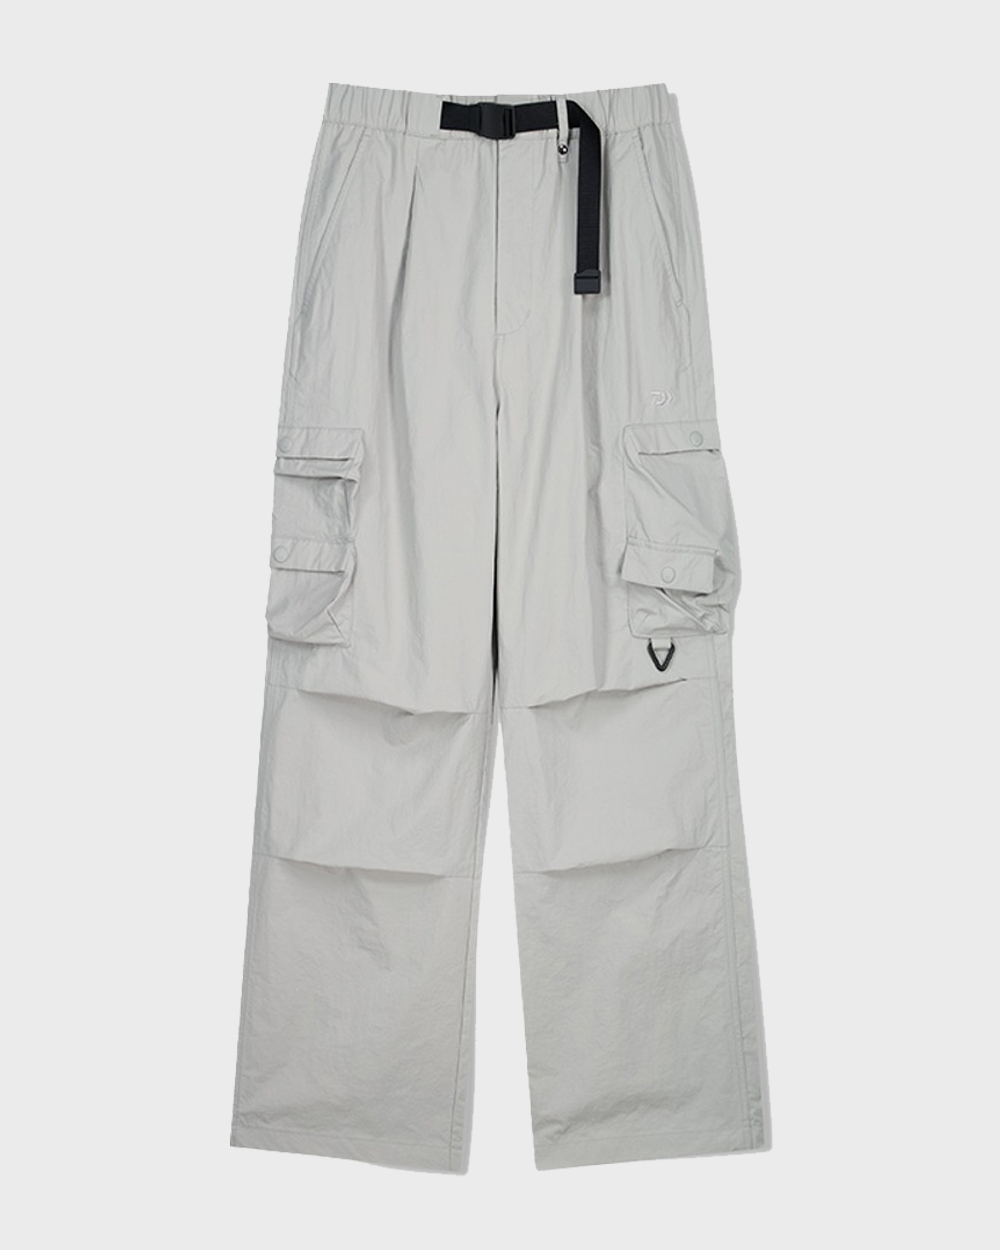 Belted Cargo Pants (Light Grey)